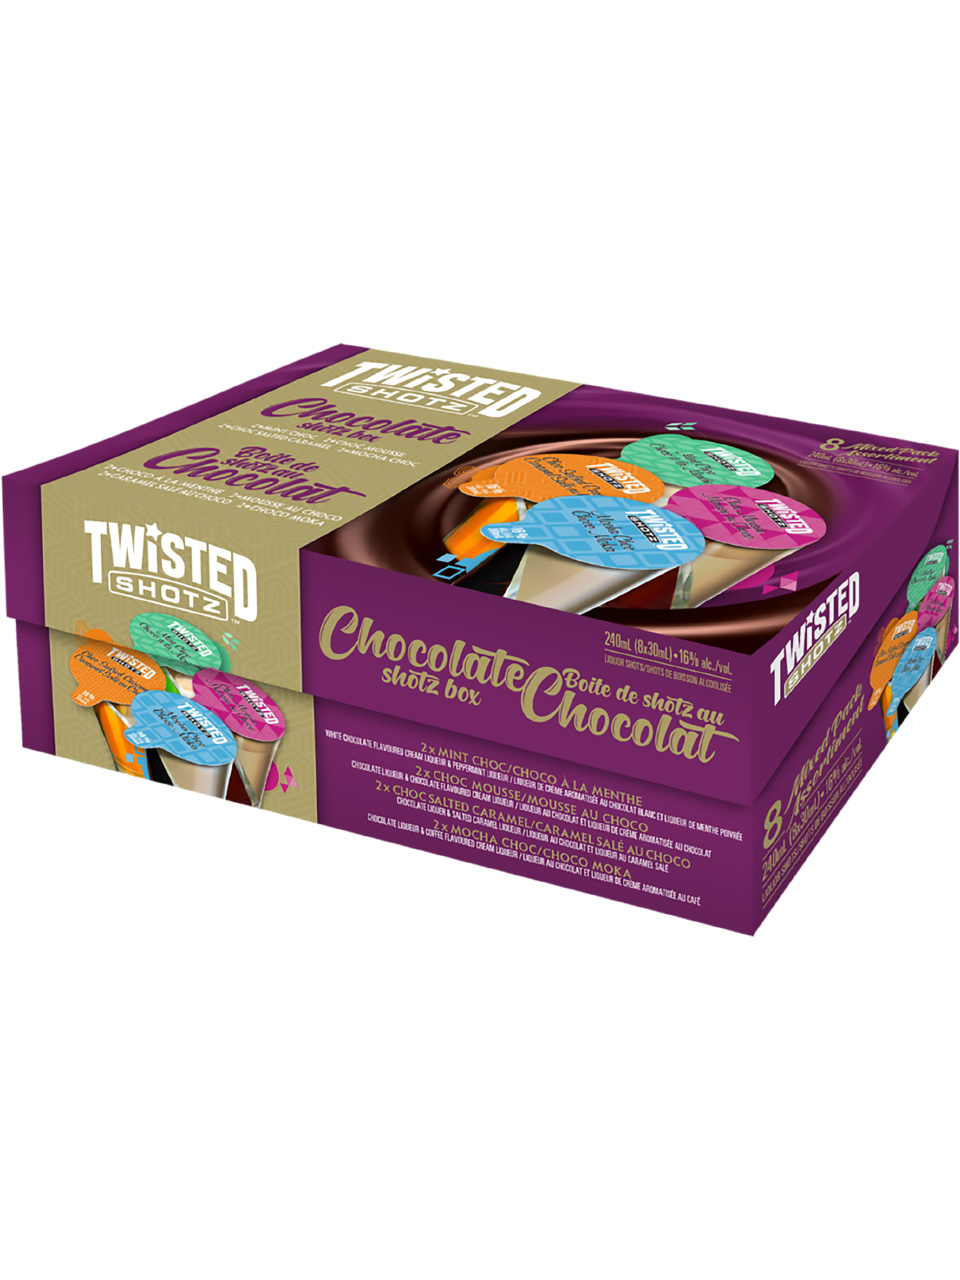 Twisted Shotz Chocolate Pack